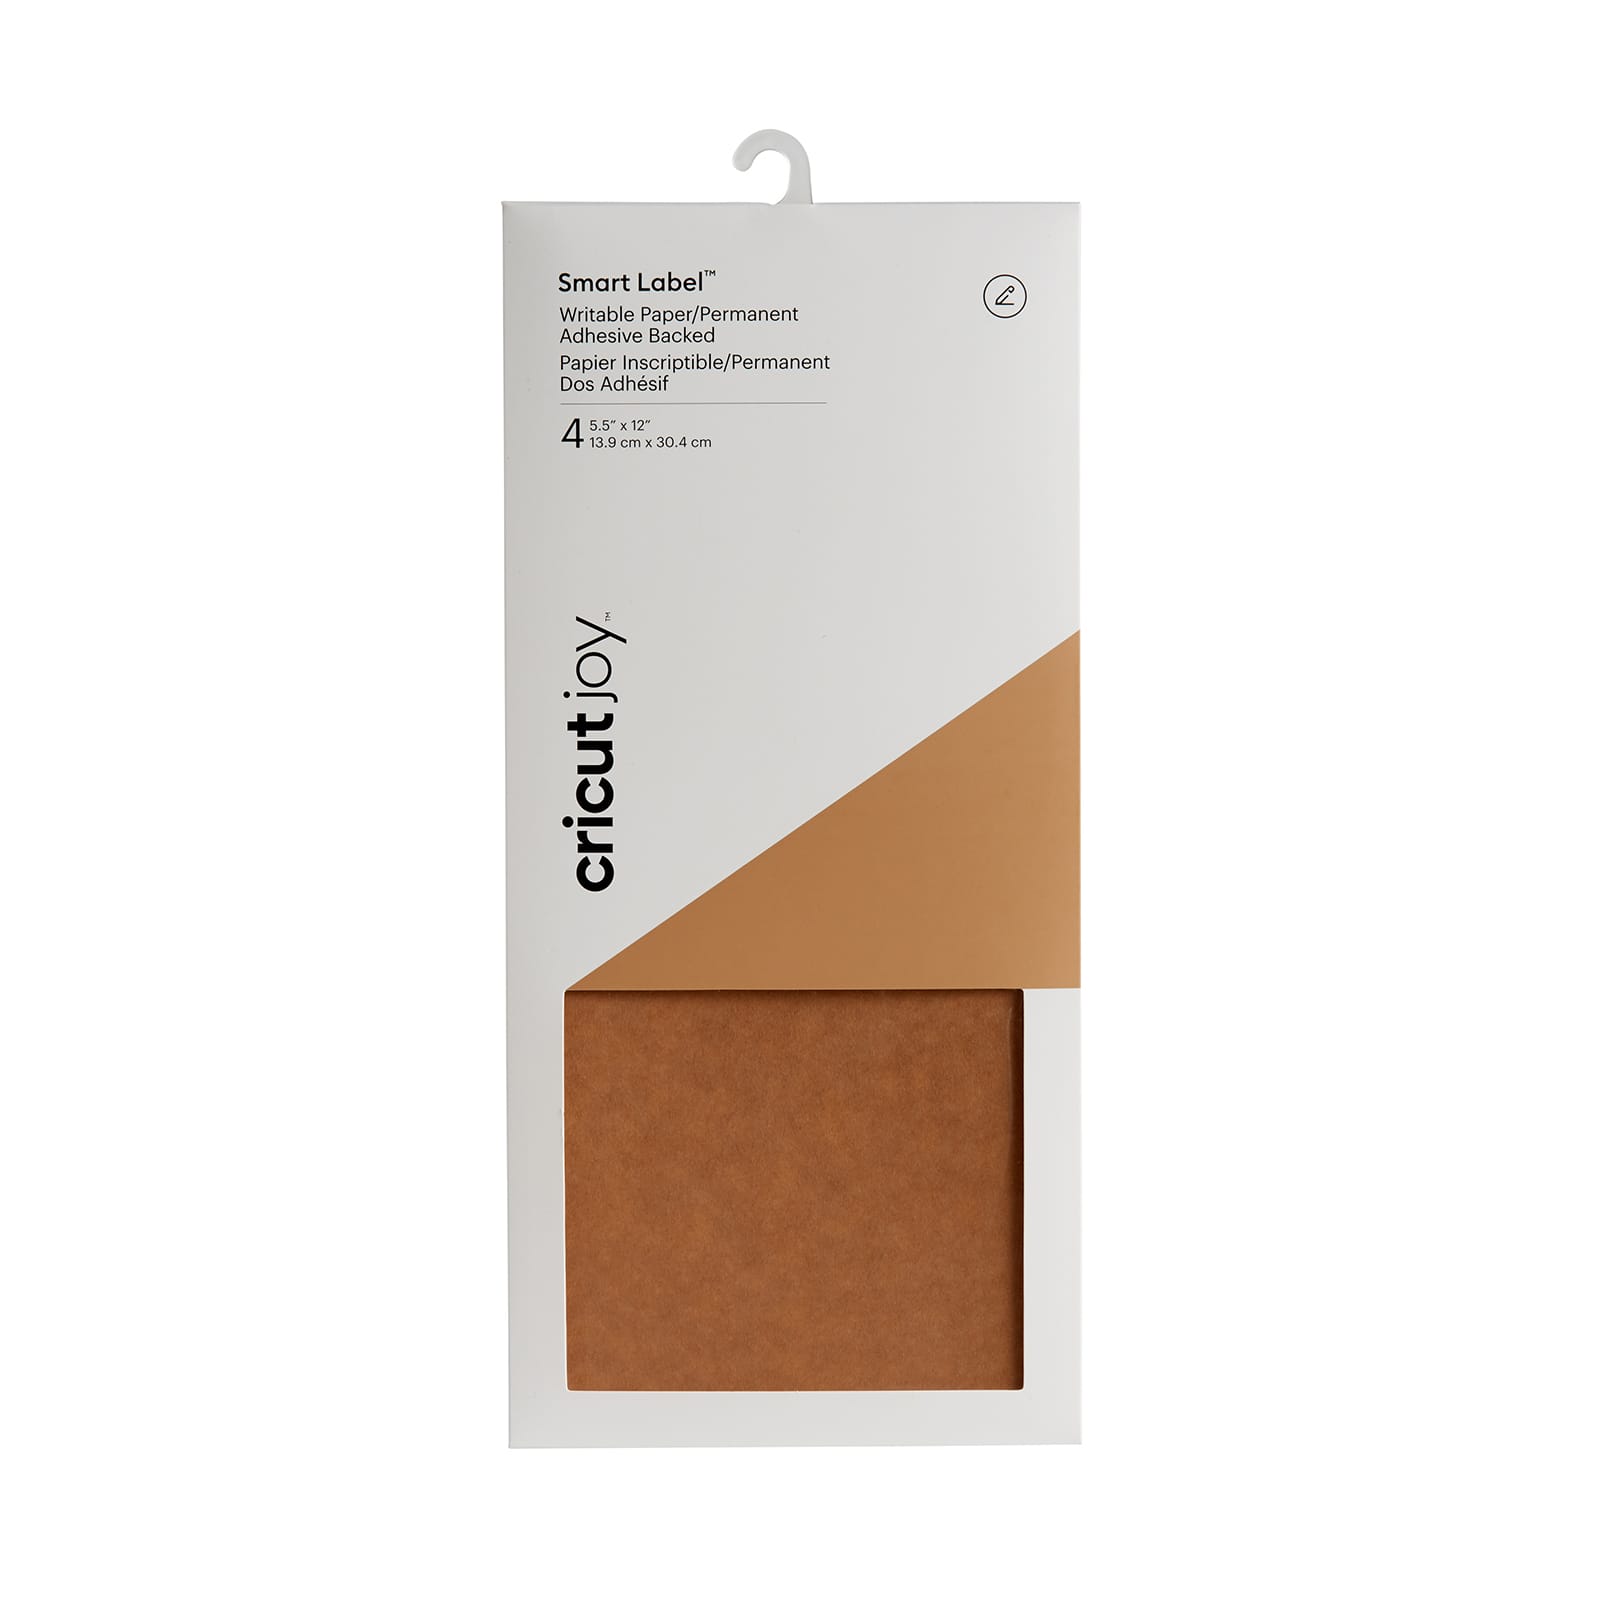 6 Packs: 4 ct. (24 total) Cricut Joy&#x2122; Smart Label&#x2122; Adhesive-Backed Writable Paper